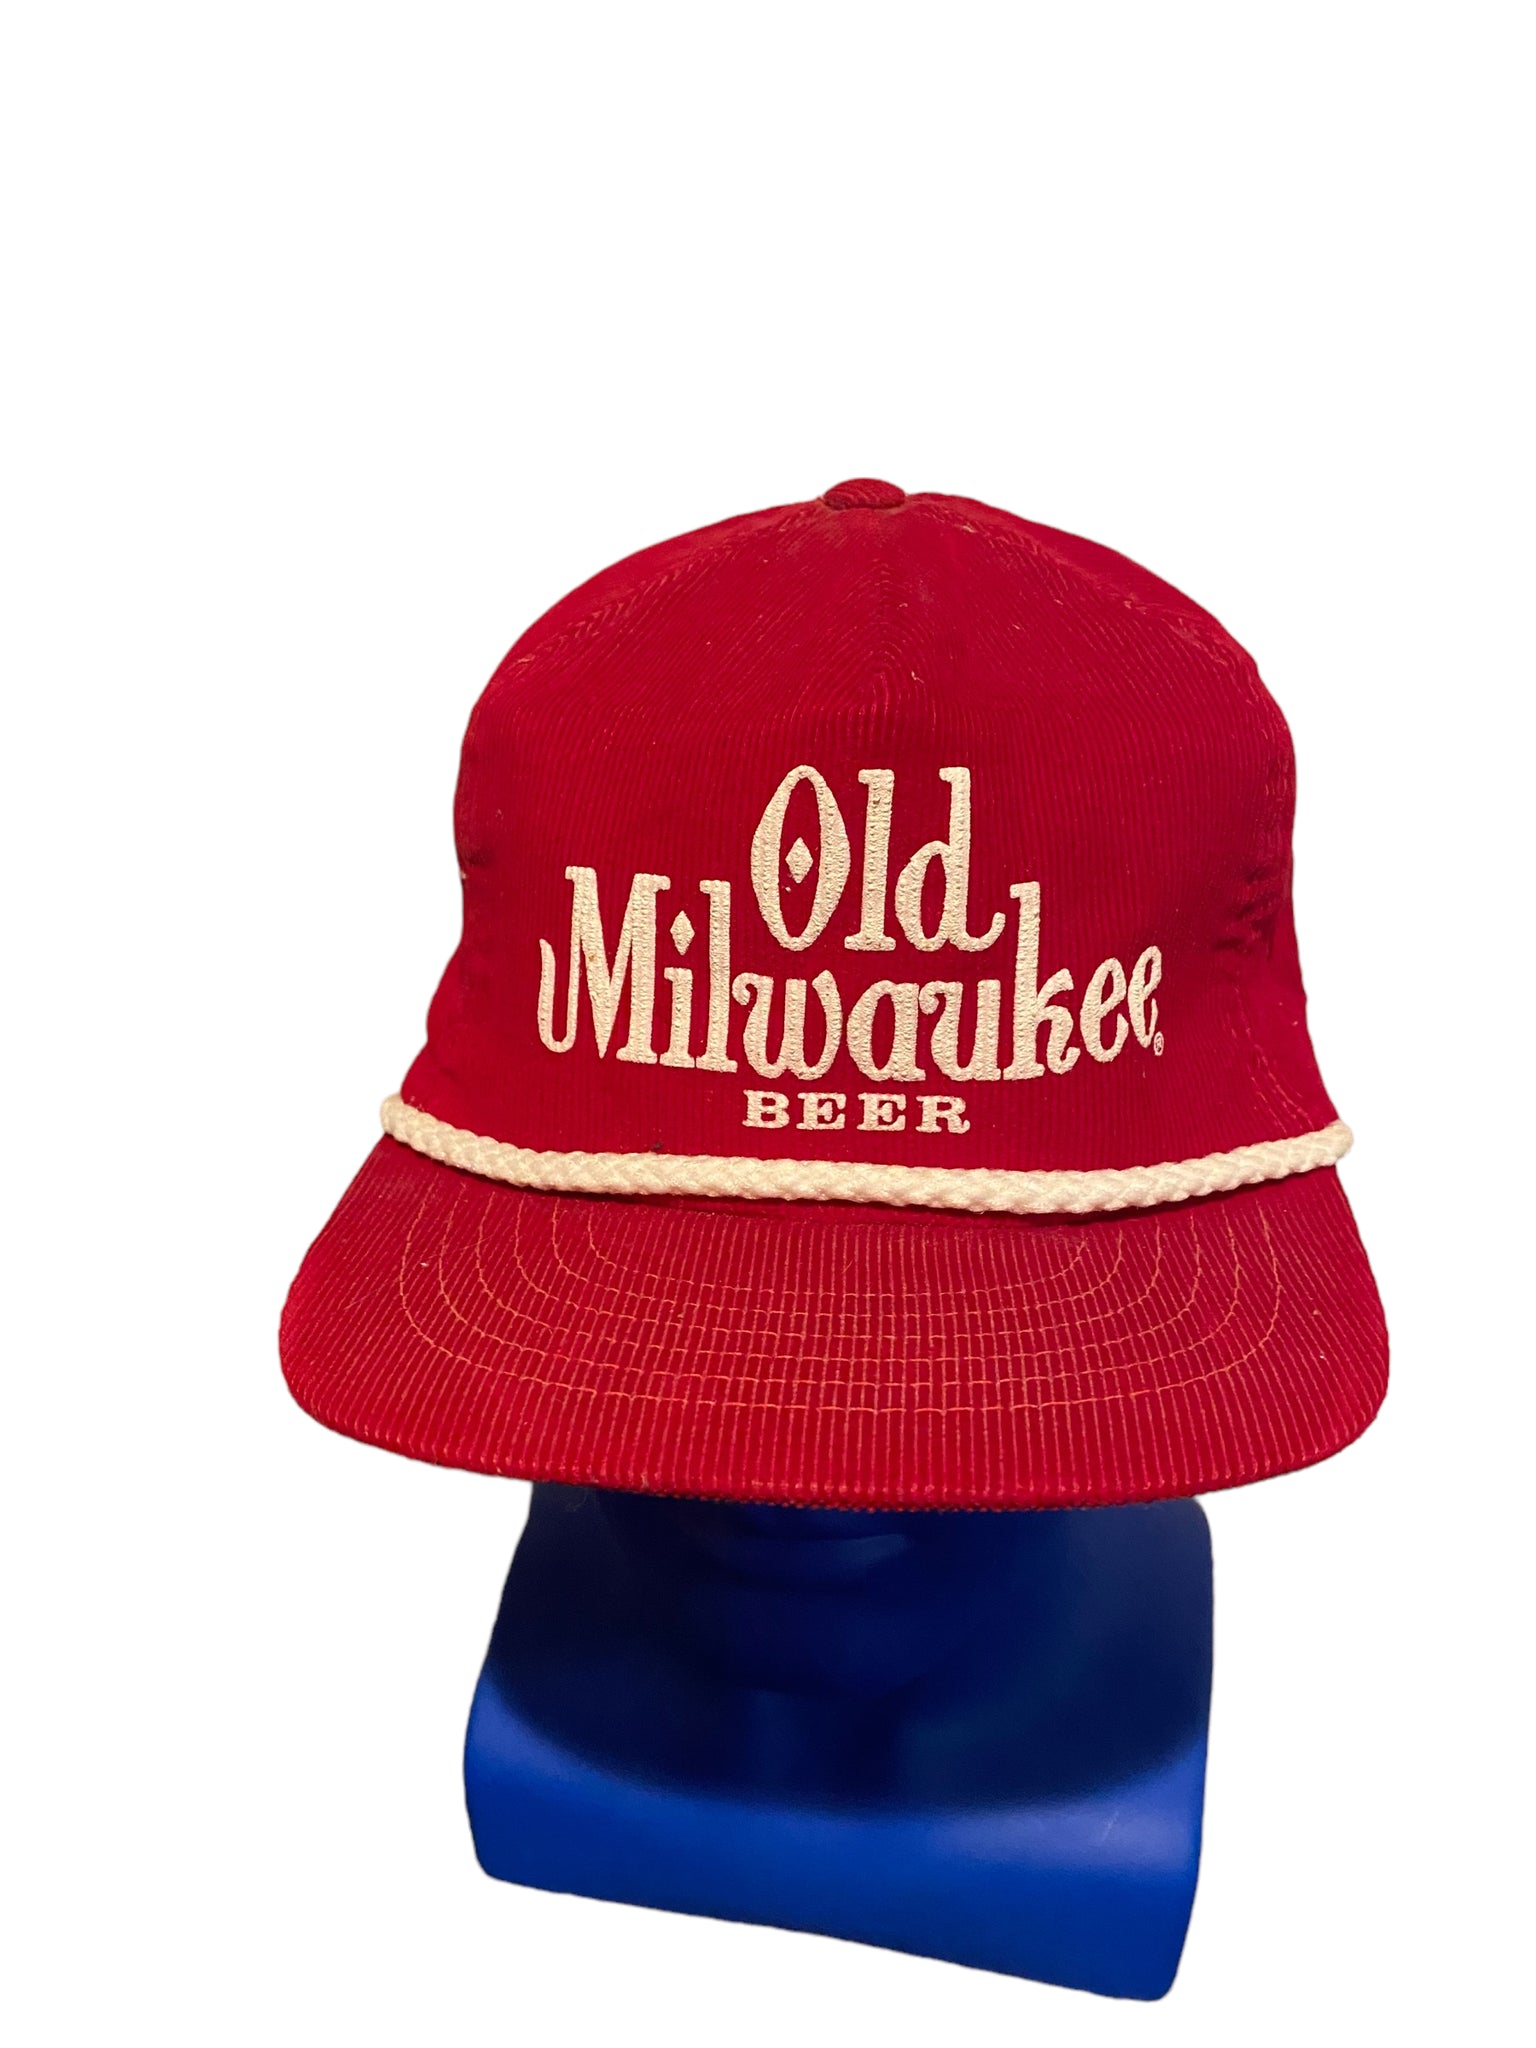 vintage old milwaukee beer corduroy rope hat snapback Very Clean Made In The USA